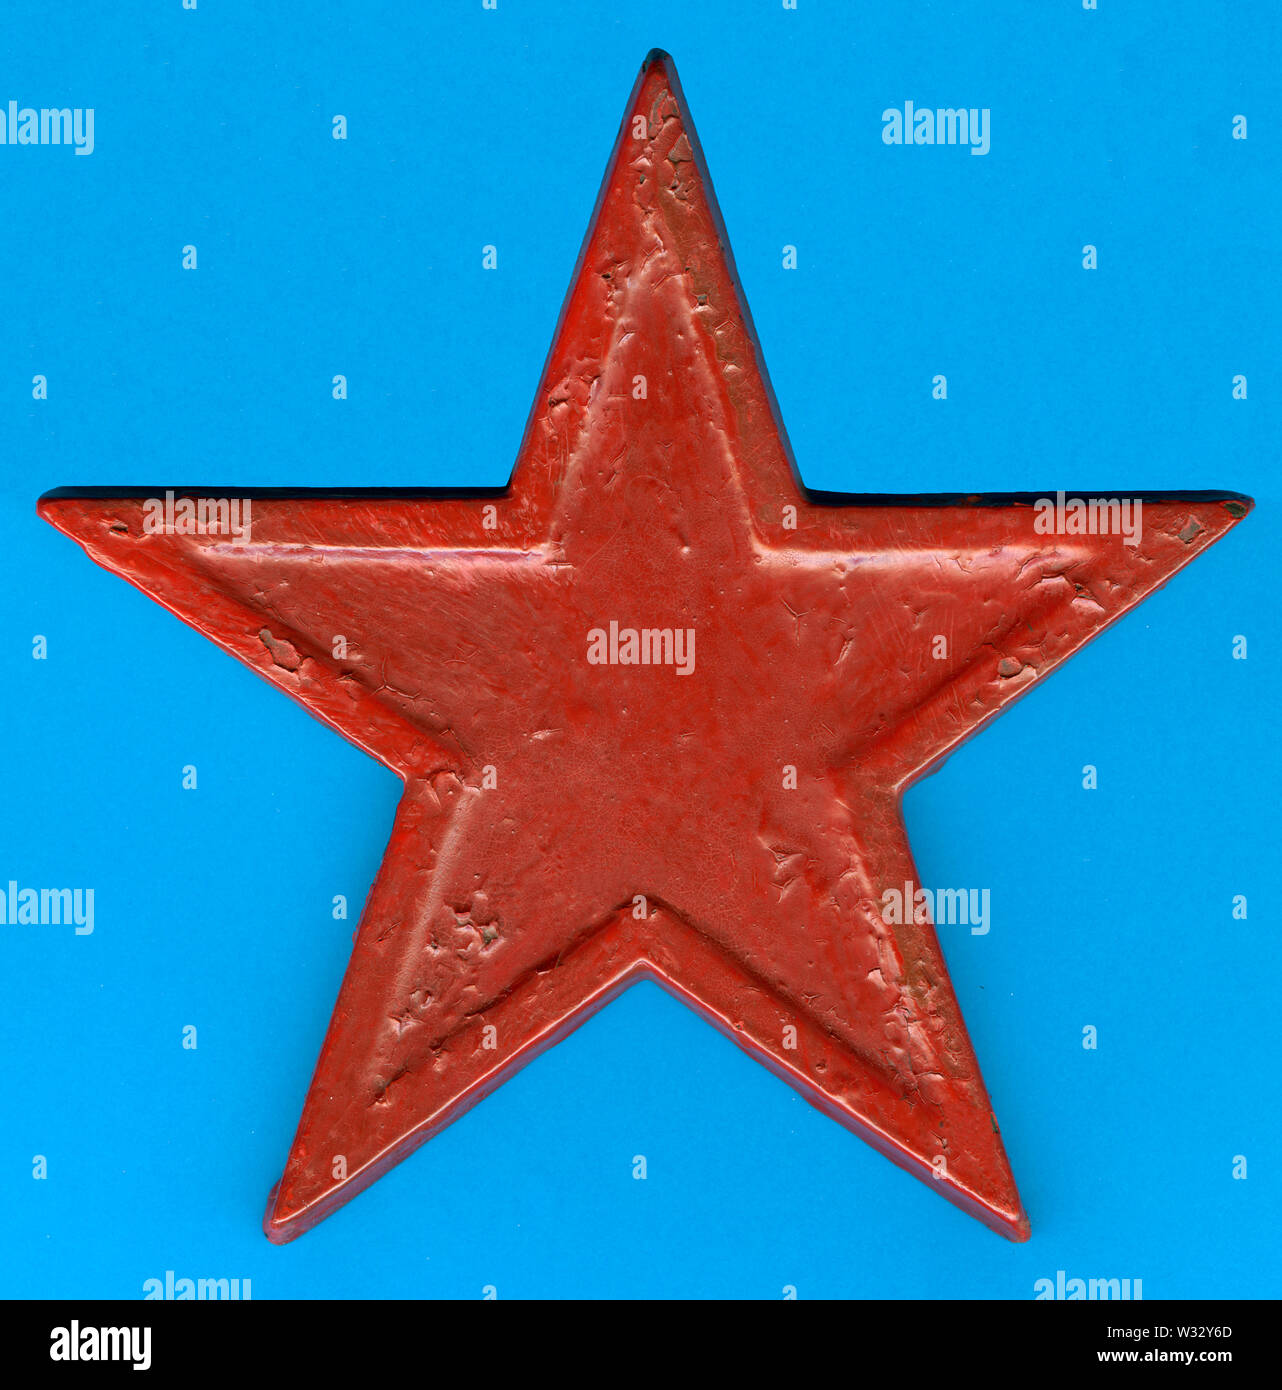 Kommunismus symbolfoto hi-res stock photography and images - Alamy